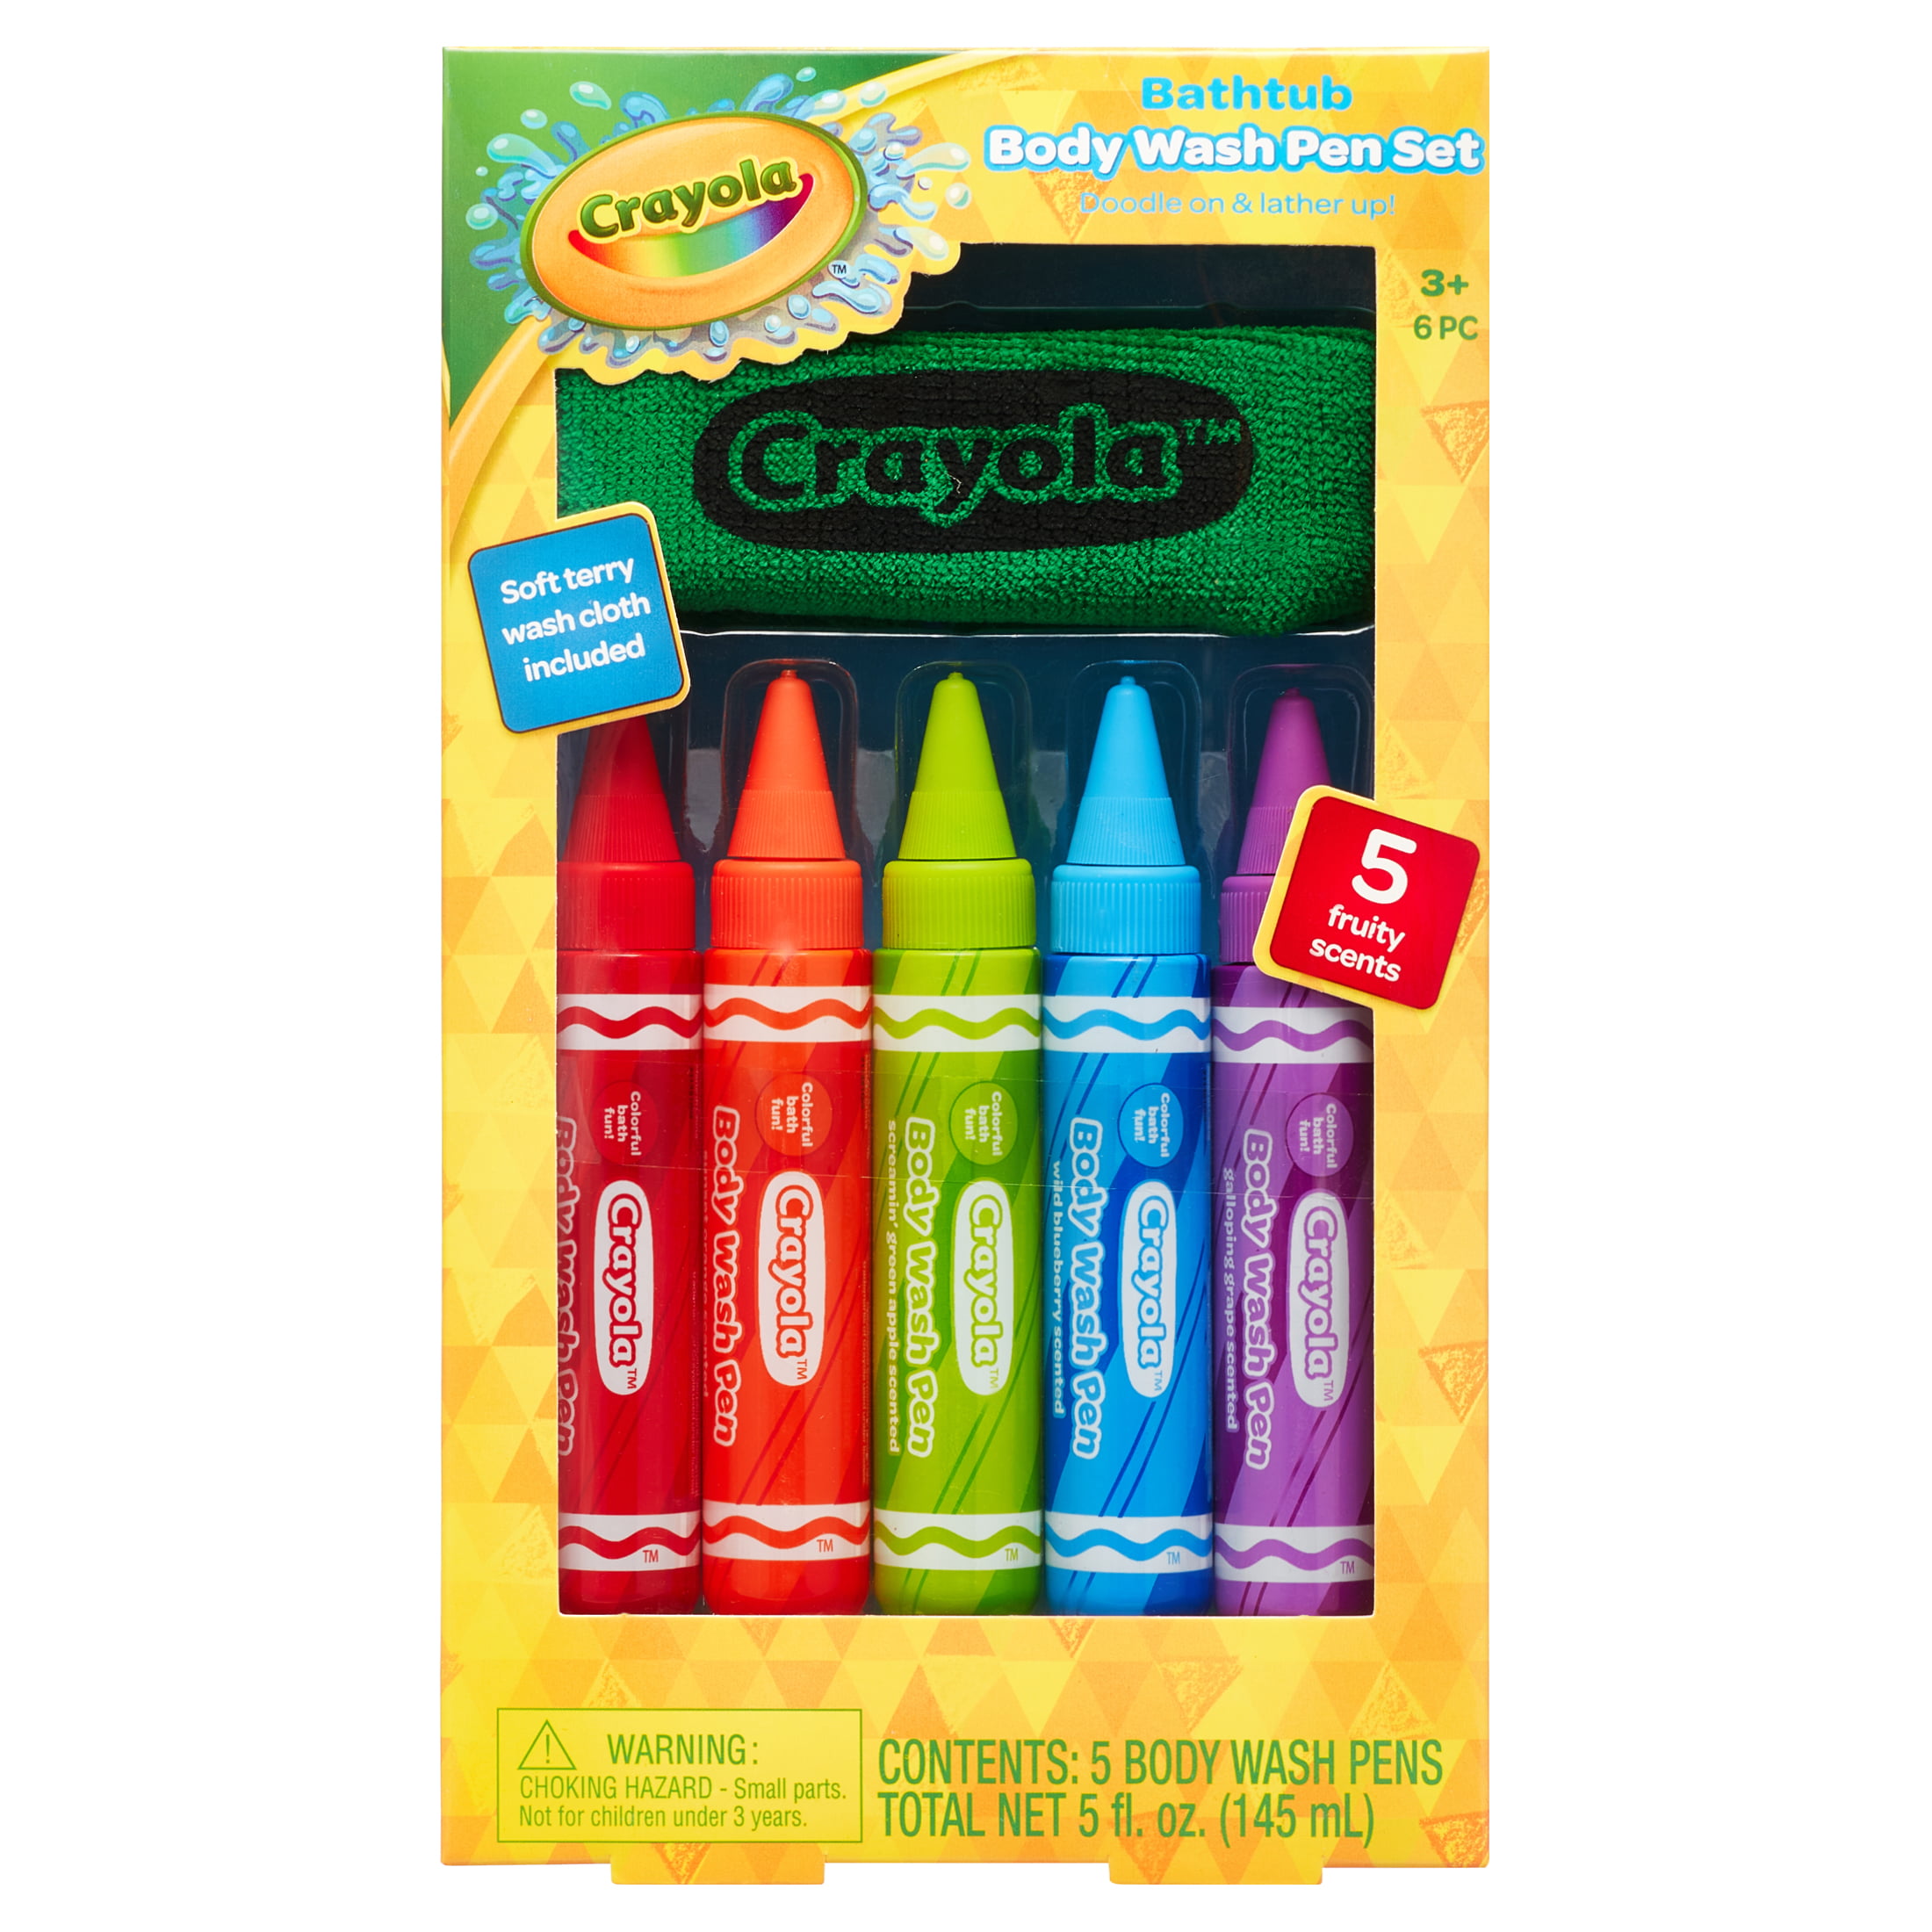 Crayola Fruity Scents 5 Piece Bathtub Body Wash Colorful Pen Set for Kids